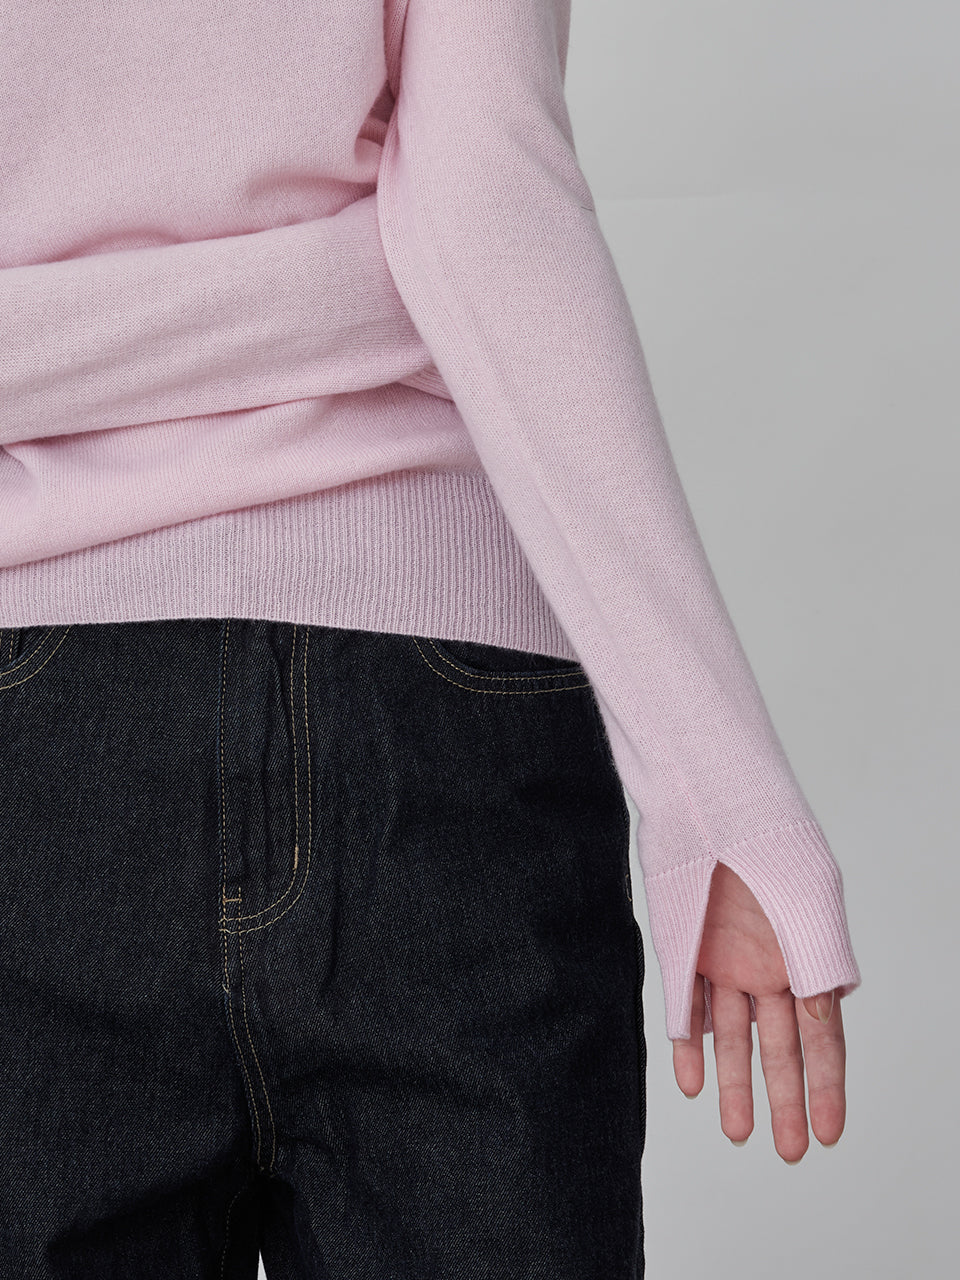 Simple High Neck Sweater_Pink Blush